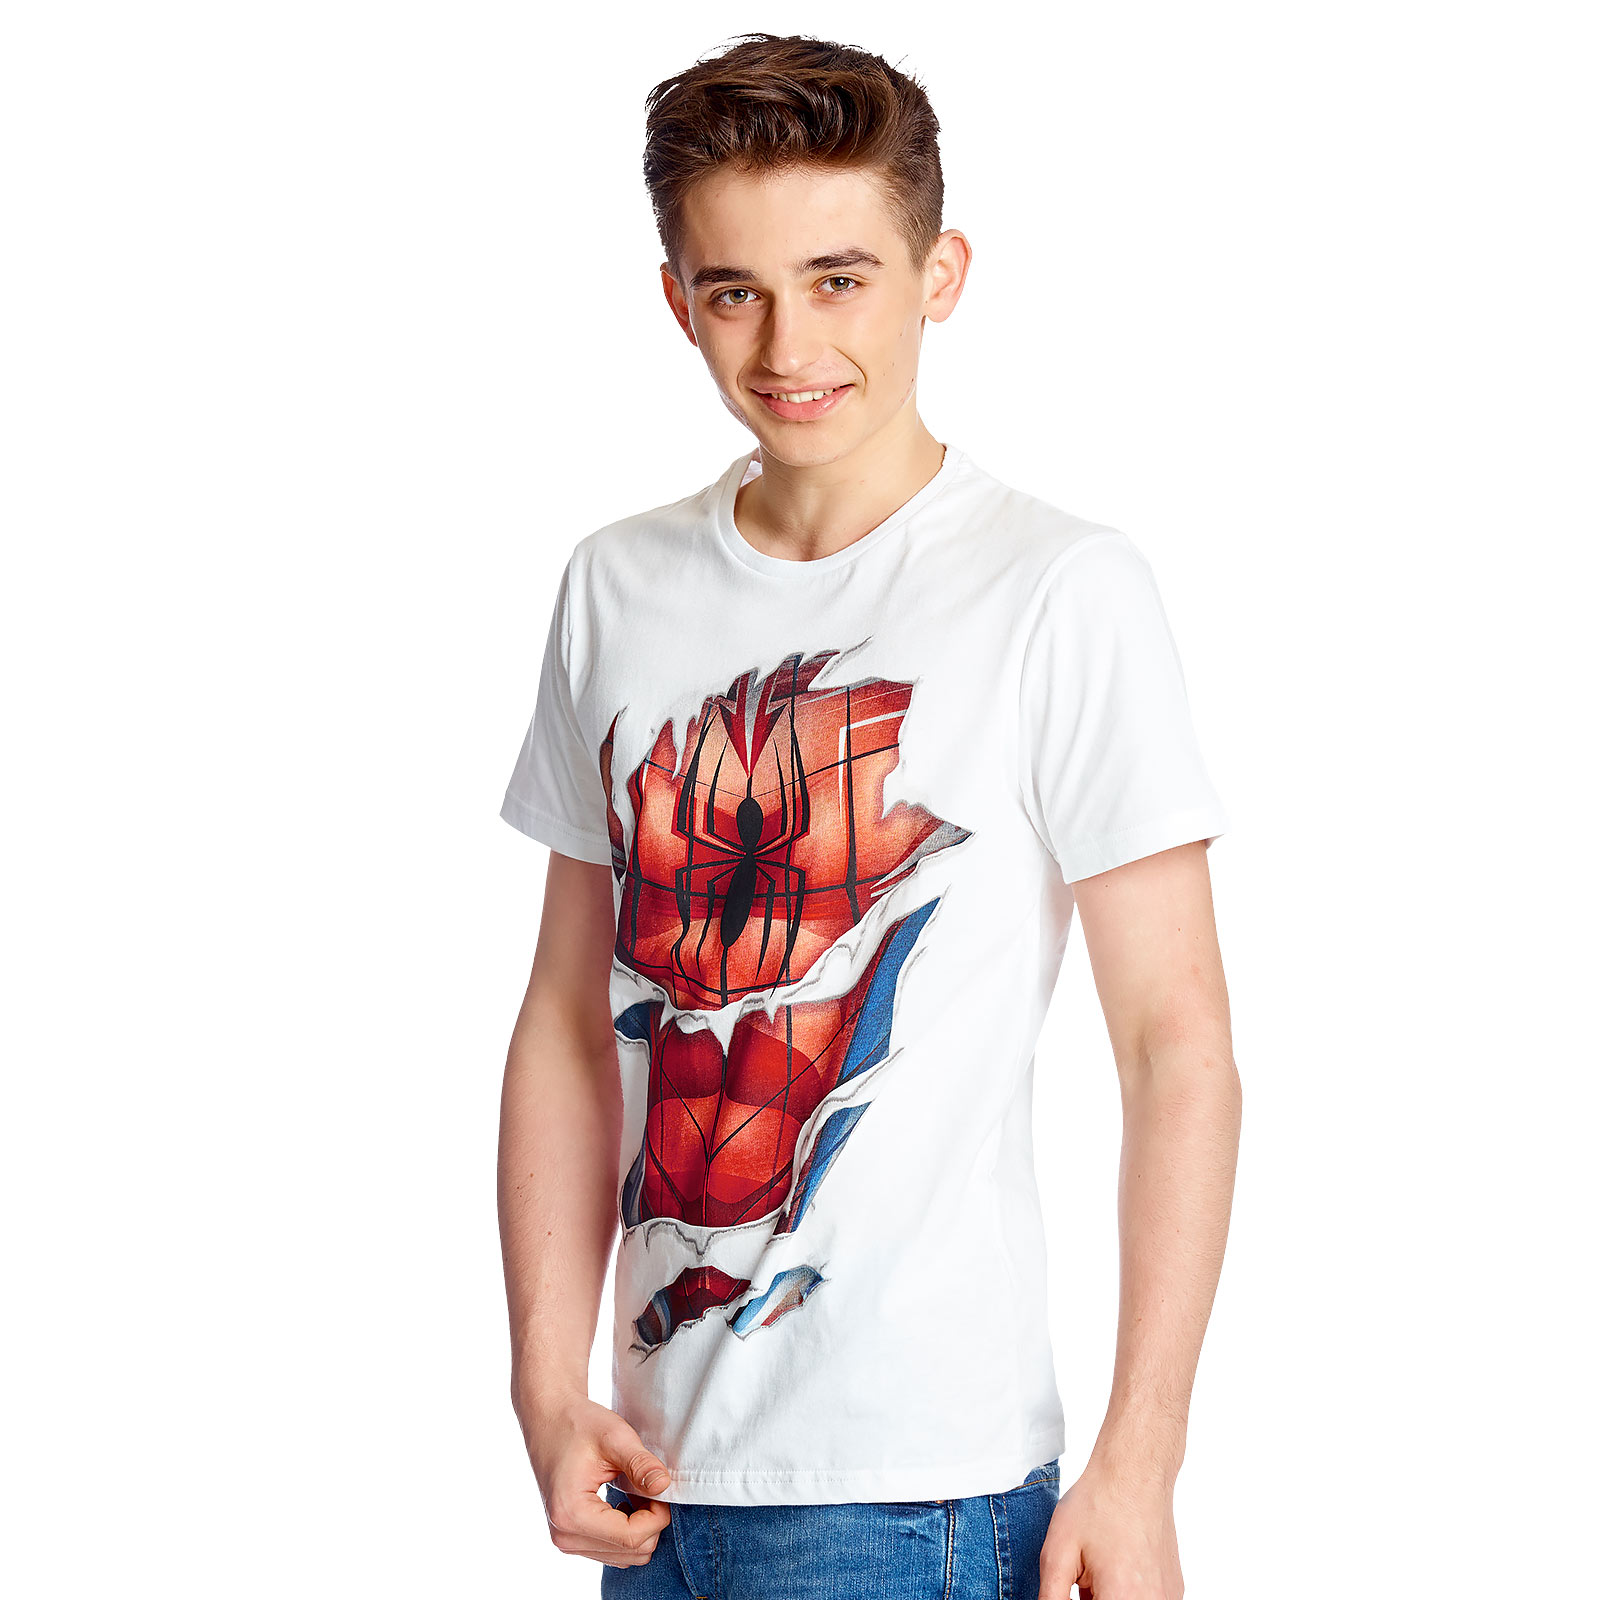 Spider-Man - Suit T-Shirt white